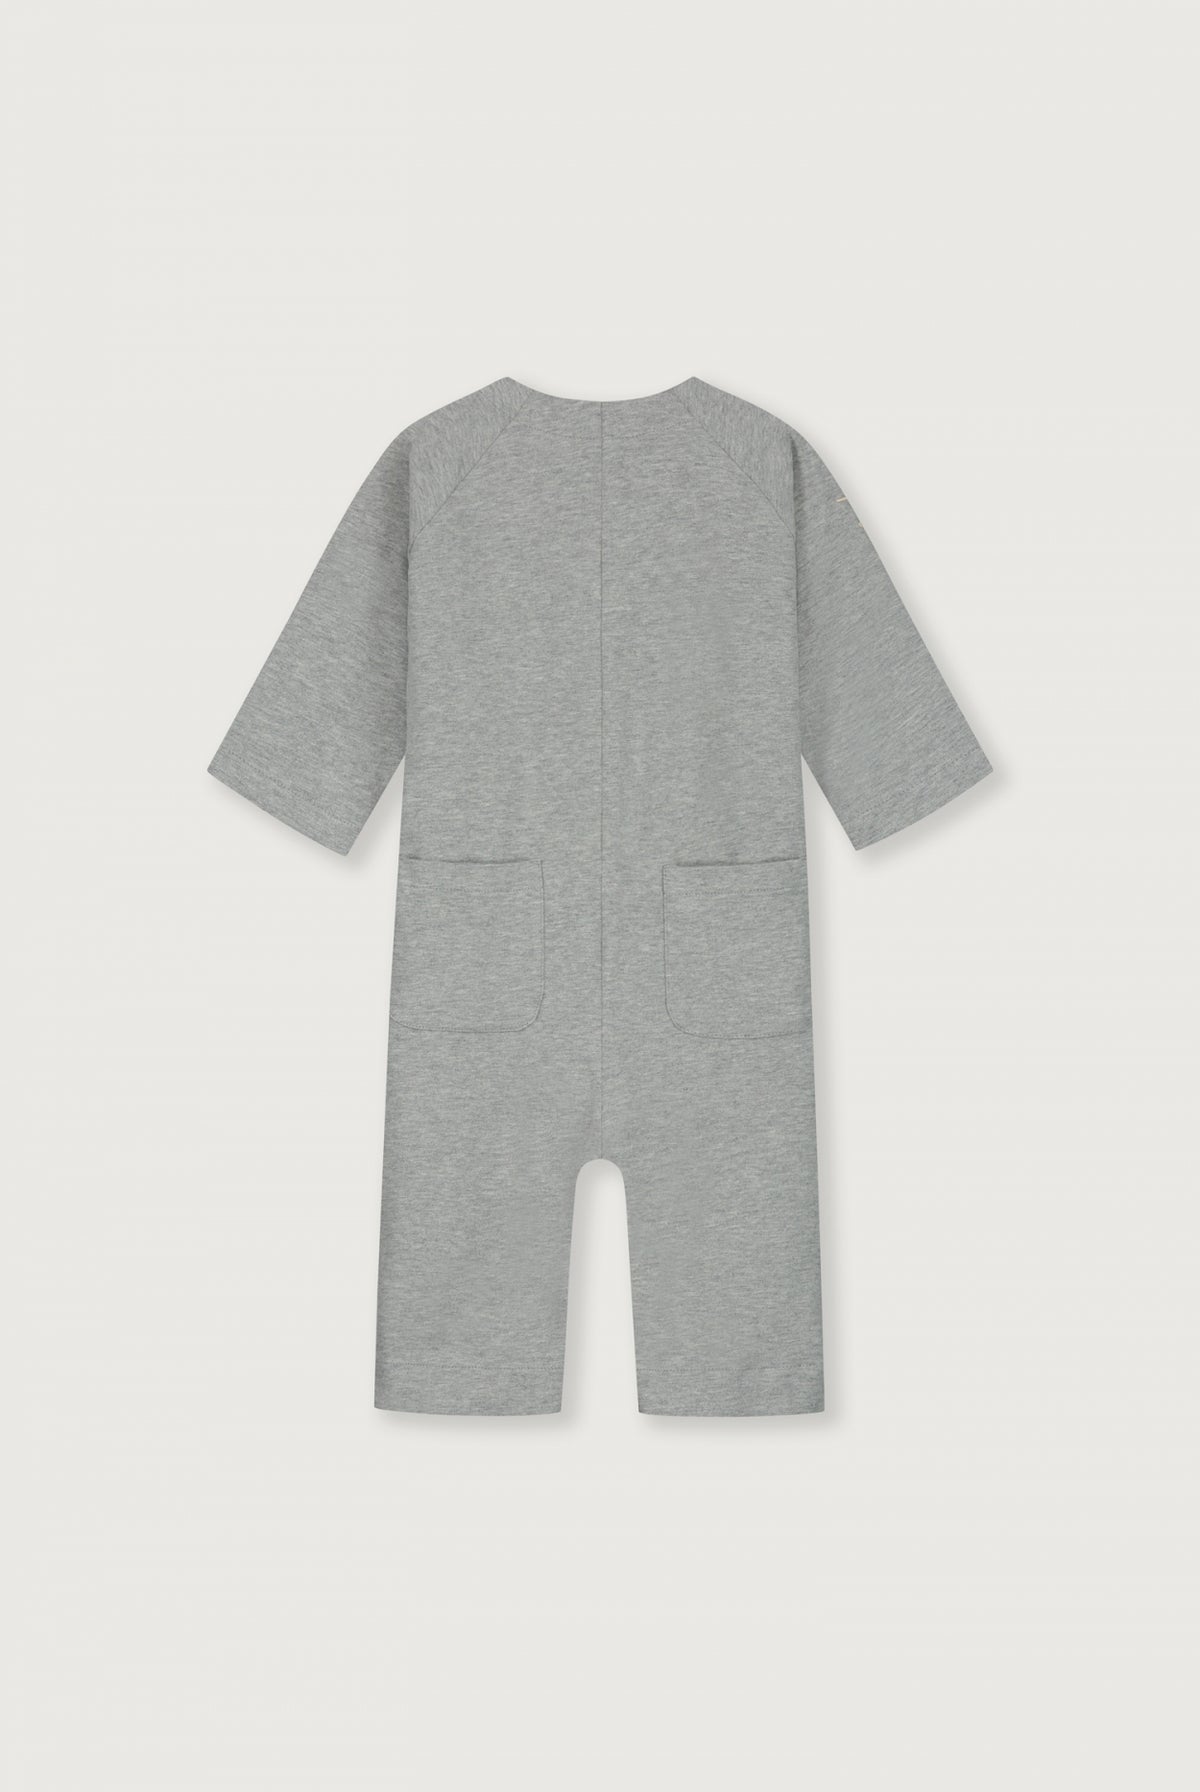 Baby Overall | Grey Melange